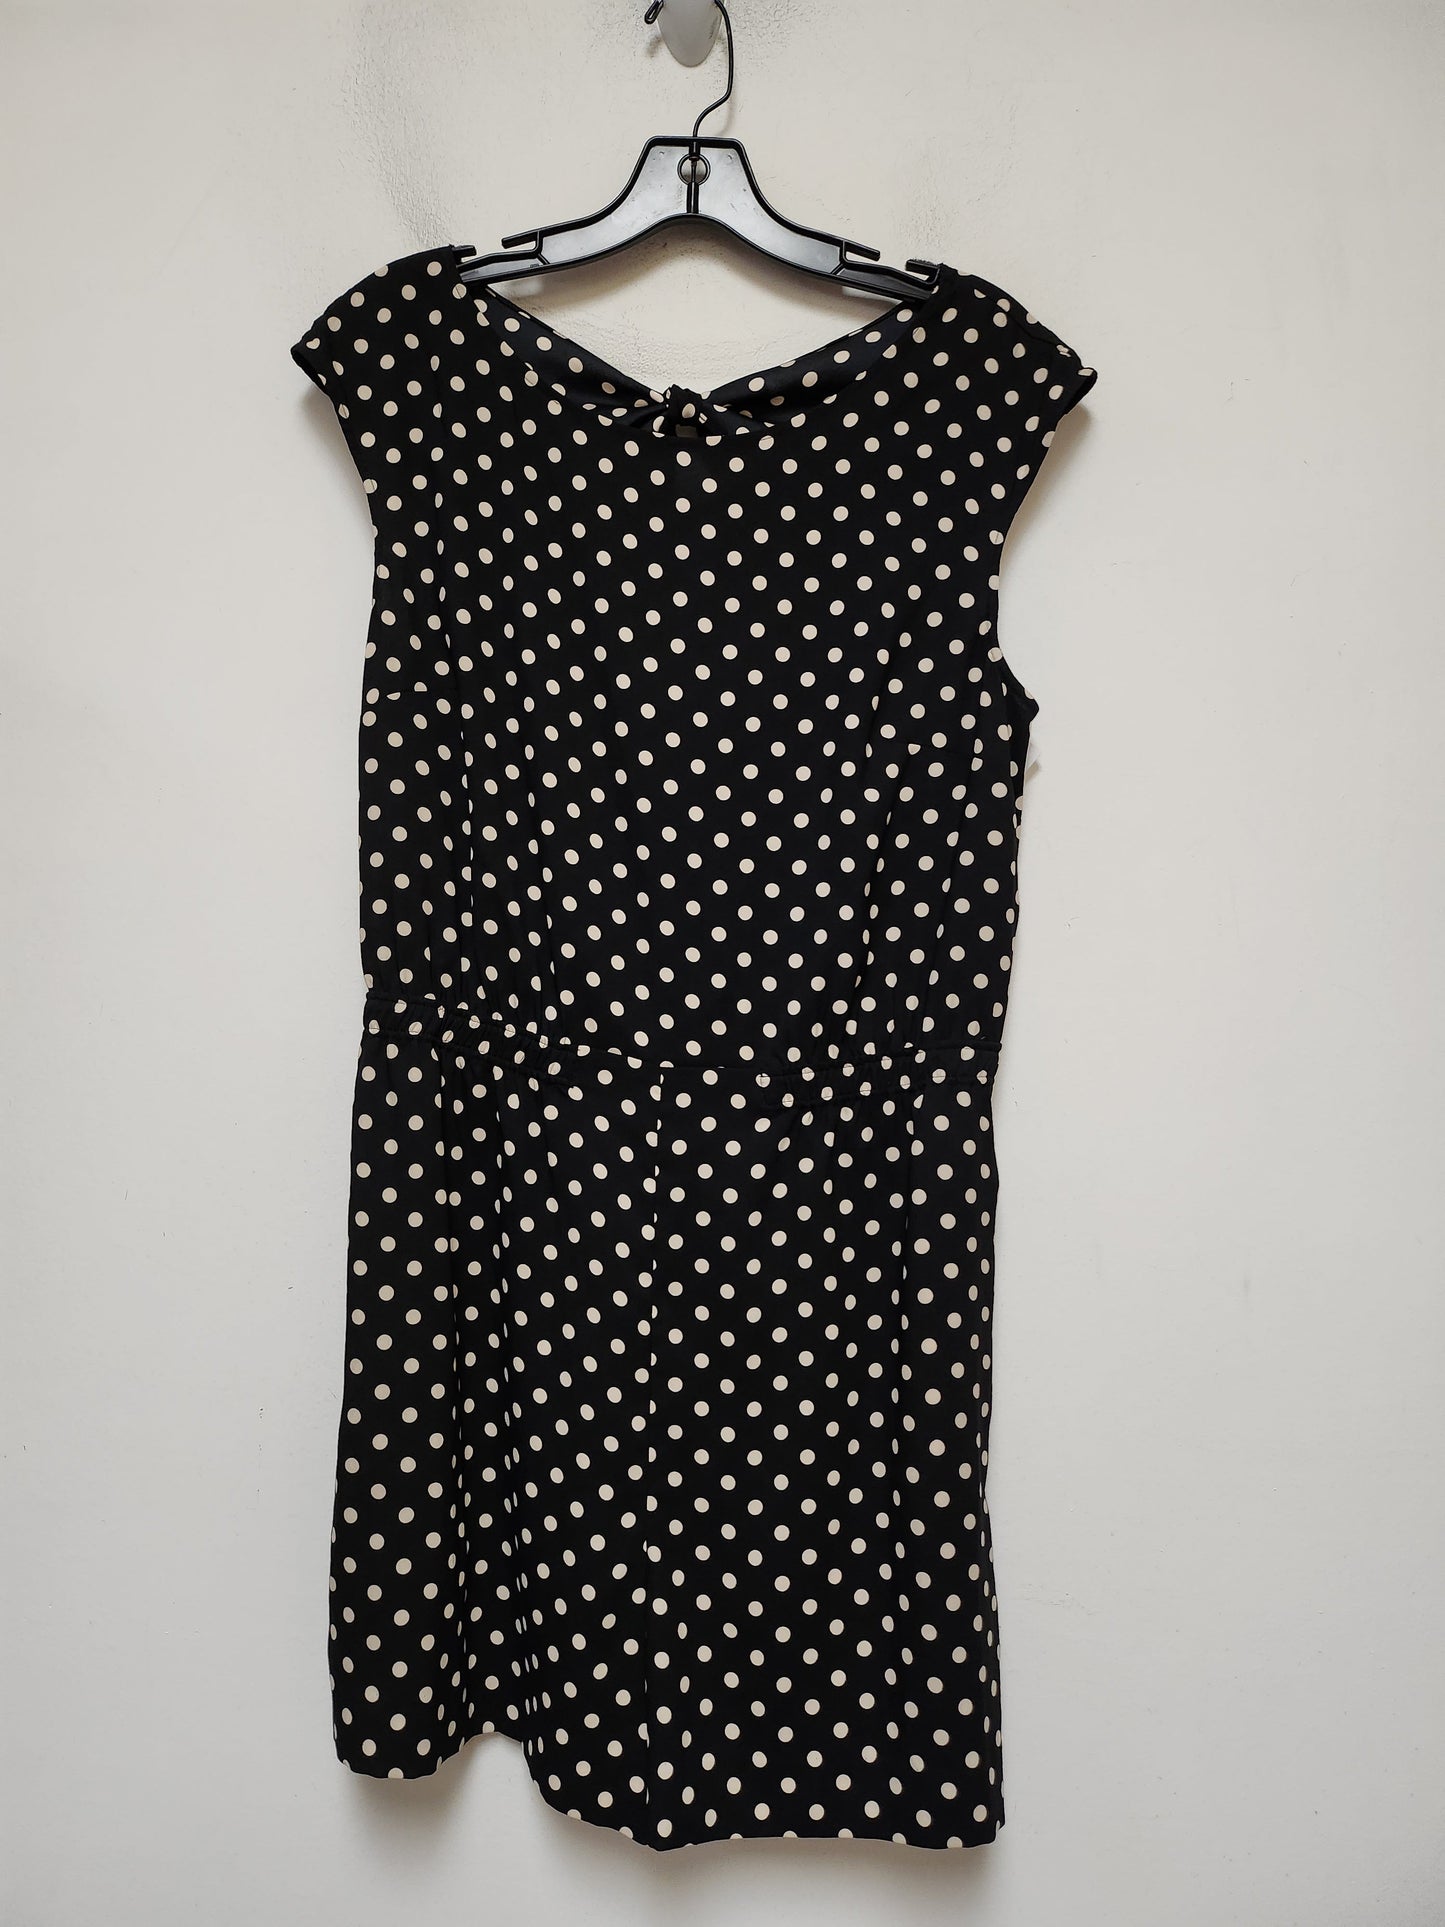 Polkadot Pattern Dress Casual Short Ann Taylor, Size M